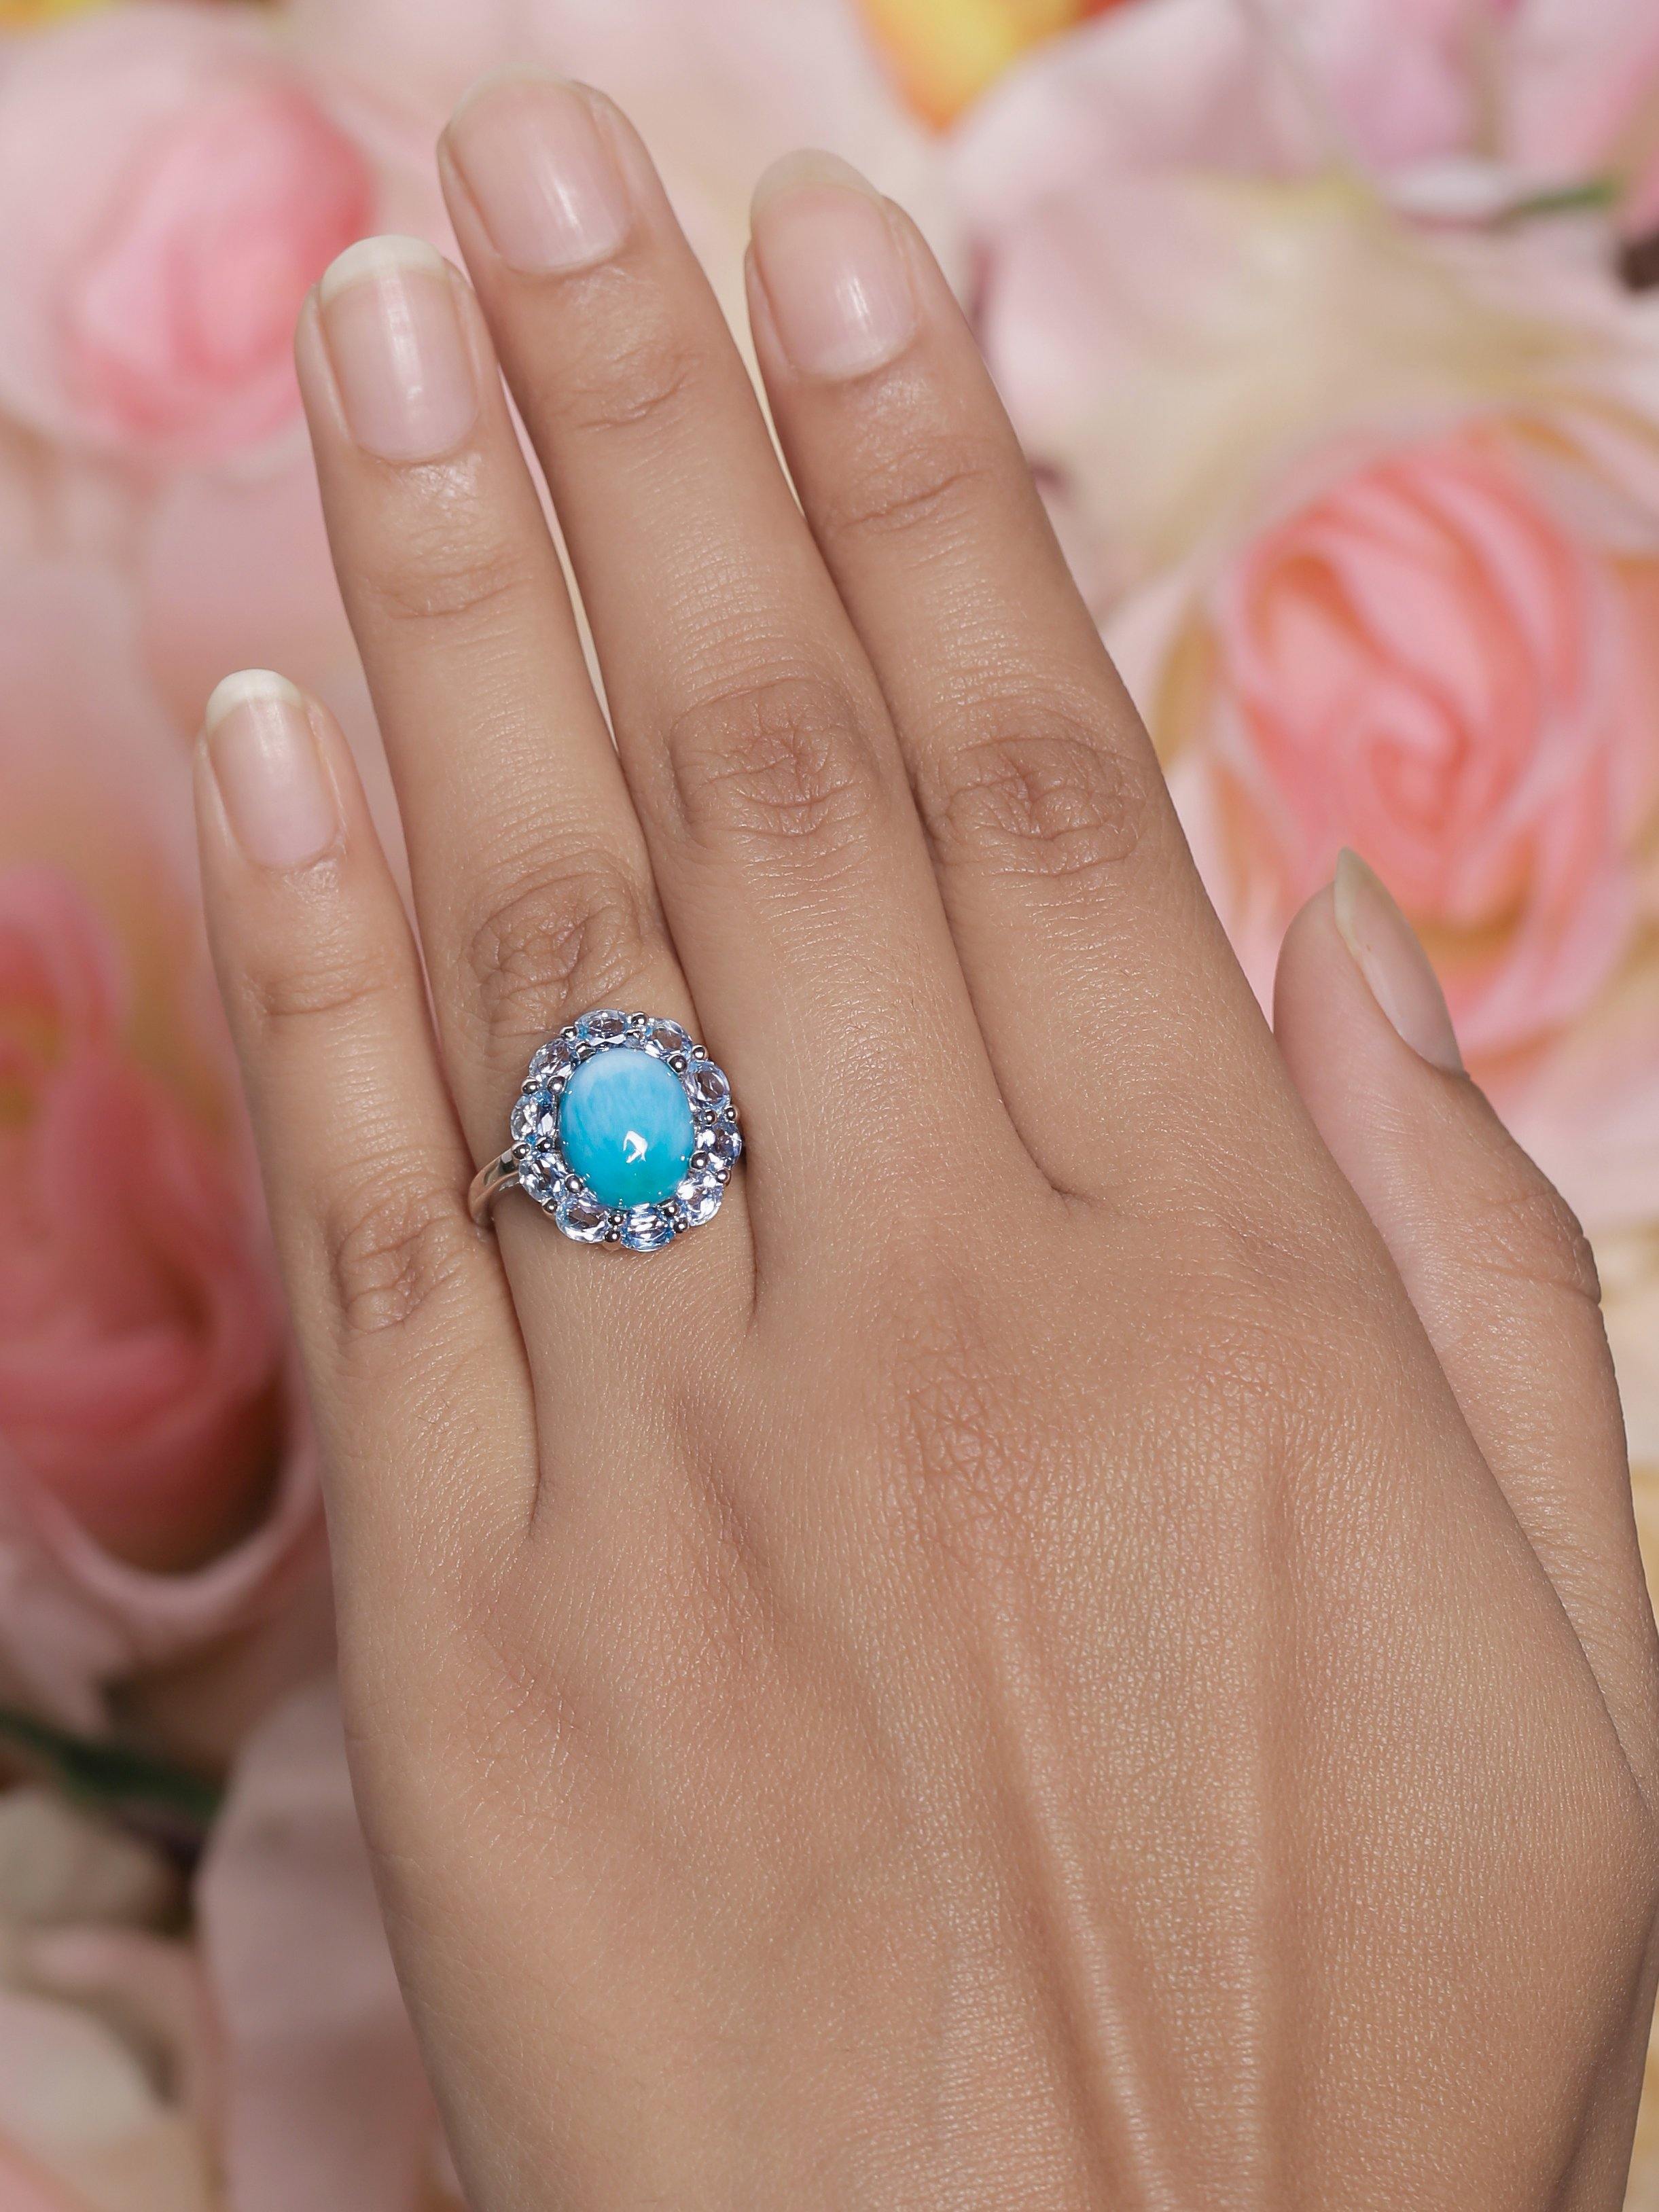 5.43 Ct. Larimar Blue Topaz Sterling Silver Flower Cluster Ring Jewelry - YoTreasure